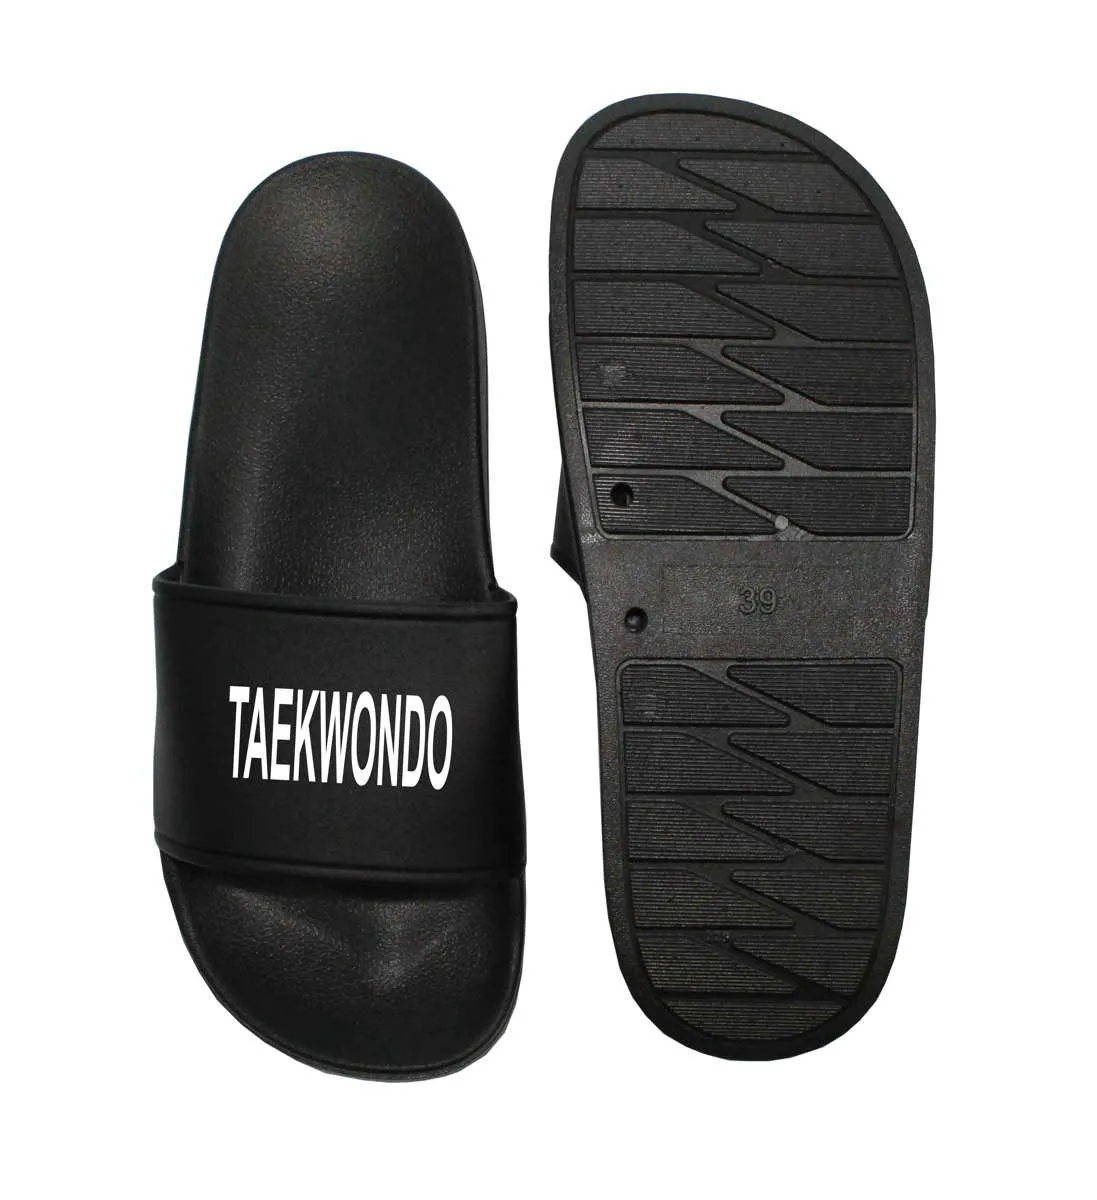 Chaussures de bain Taekwondo noir